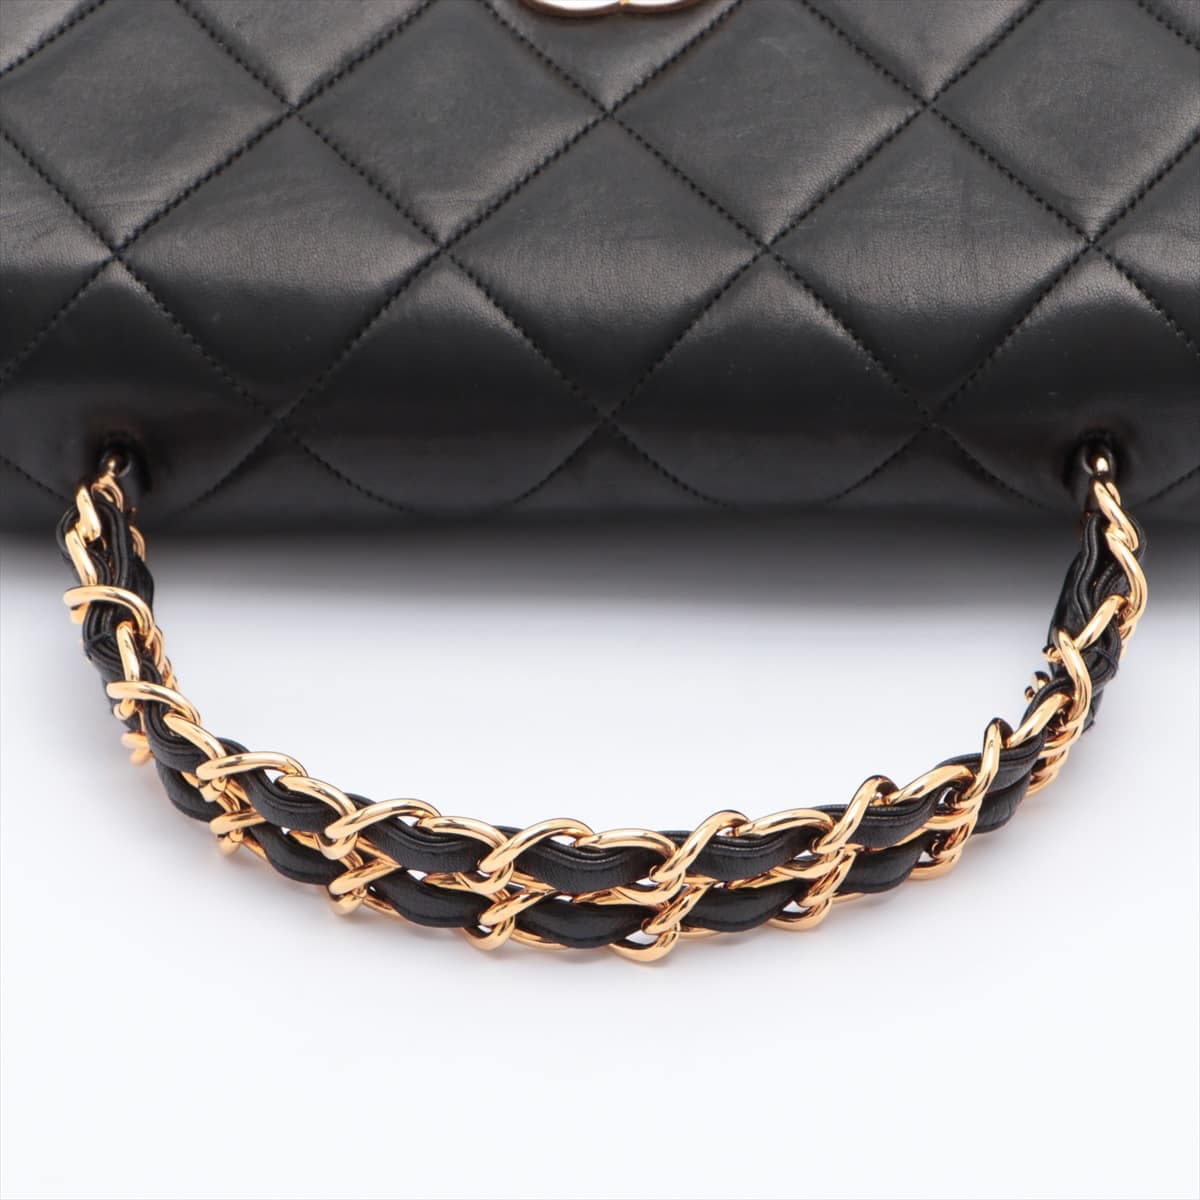 Chanel Matelasse Lambskin Chain handbag Black Gold Metal fittings 3XXXXXX